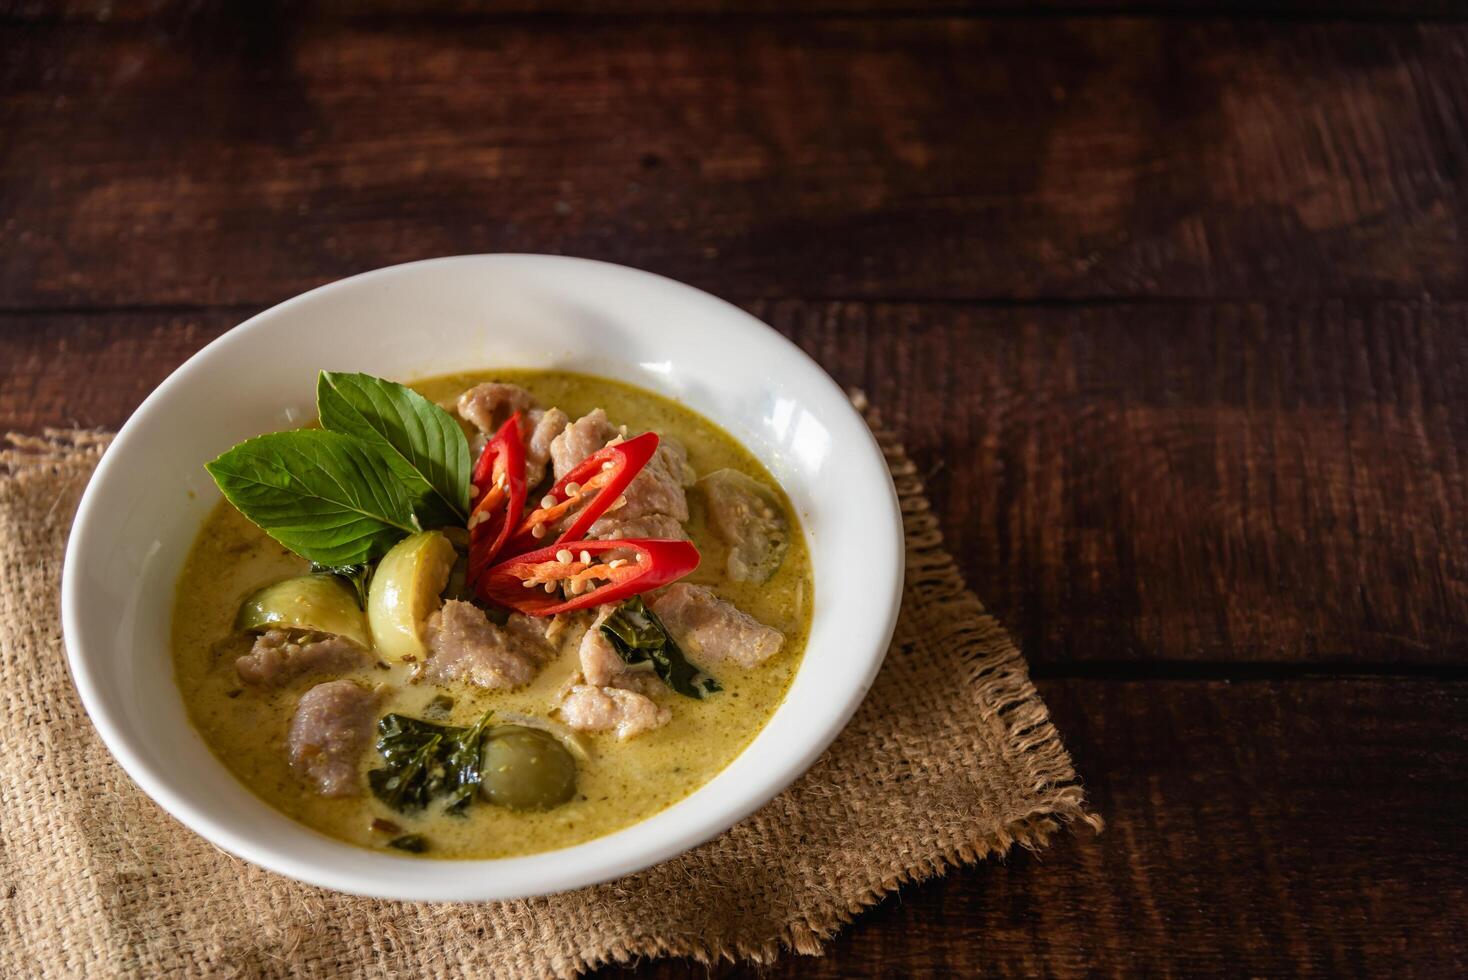 Gesloten omhoog traditioneel Thais kip groen kerrie met vers groente en kruid in kom Aan houten tafel, Thais voedsel concept. foto